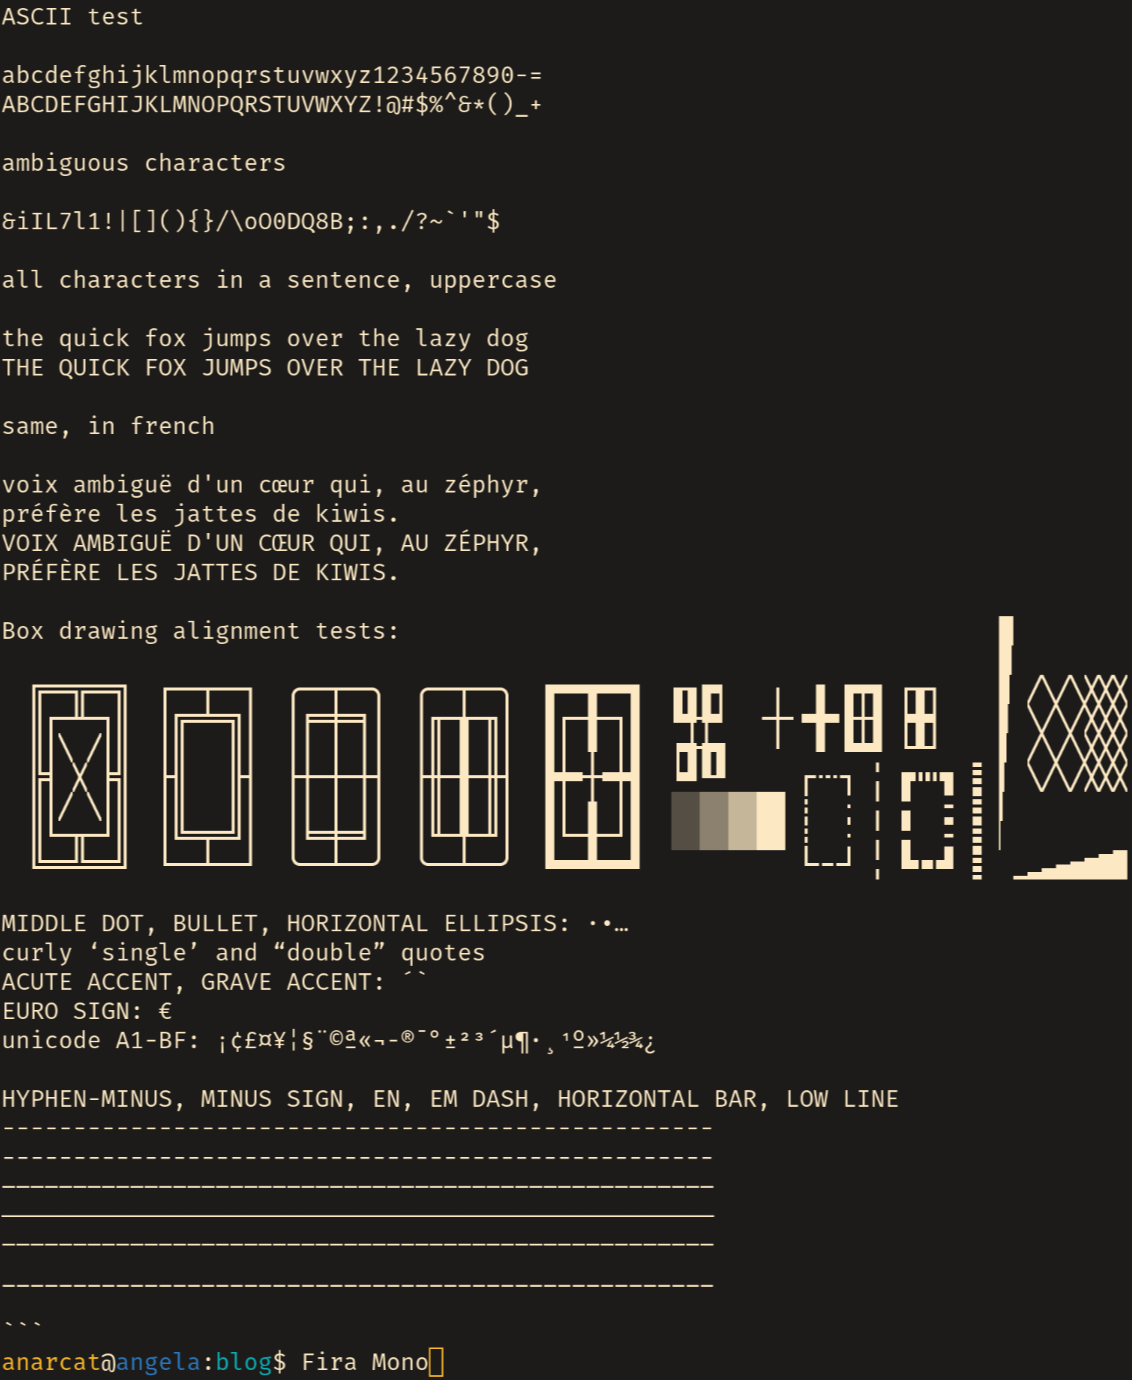 A dark terminal
showing the test sheet in Fira Mono